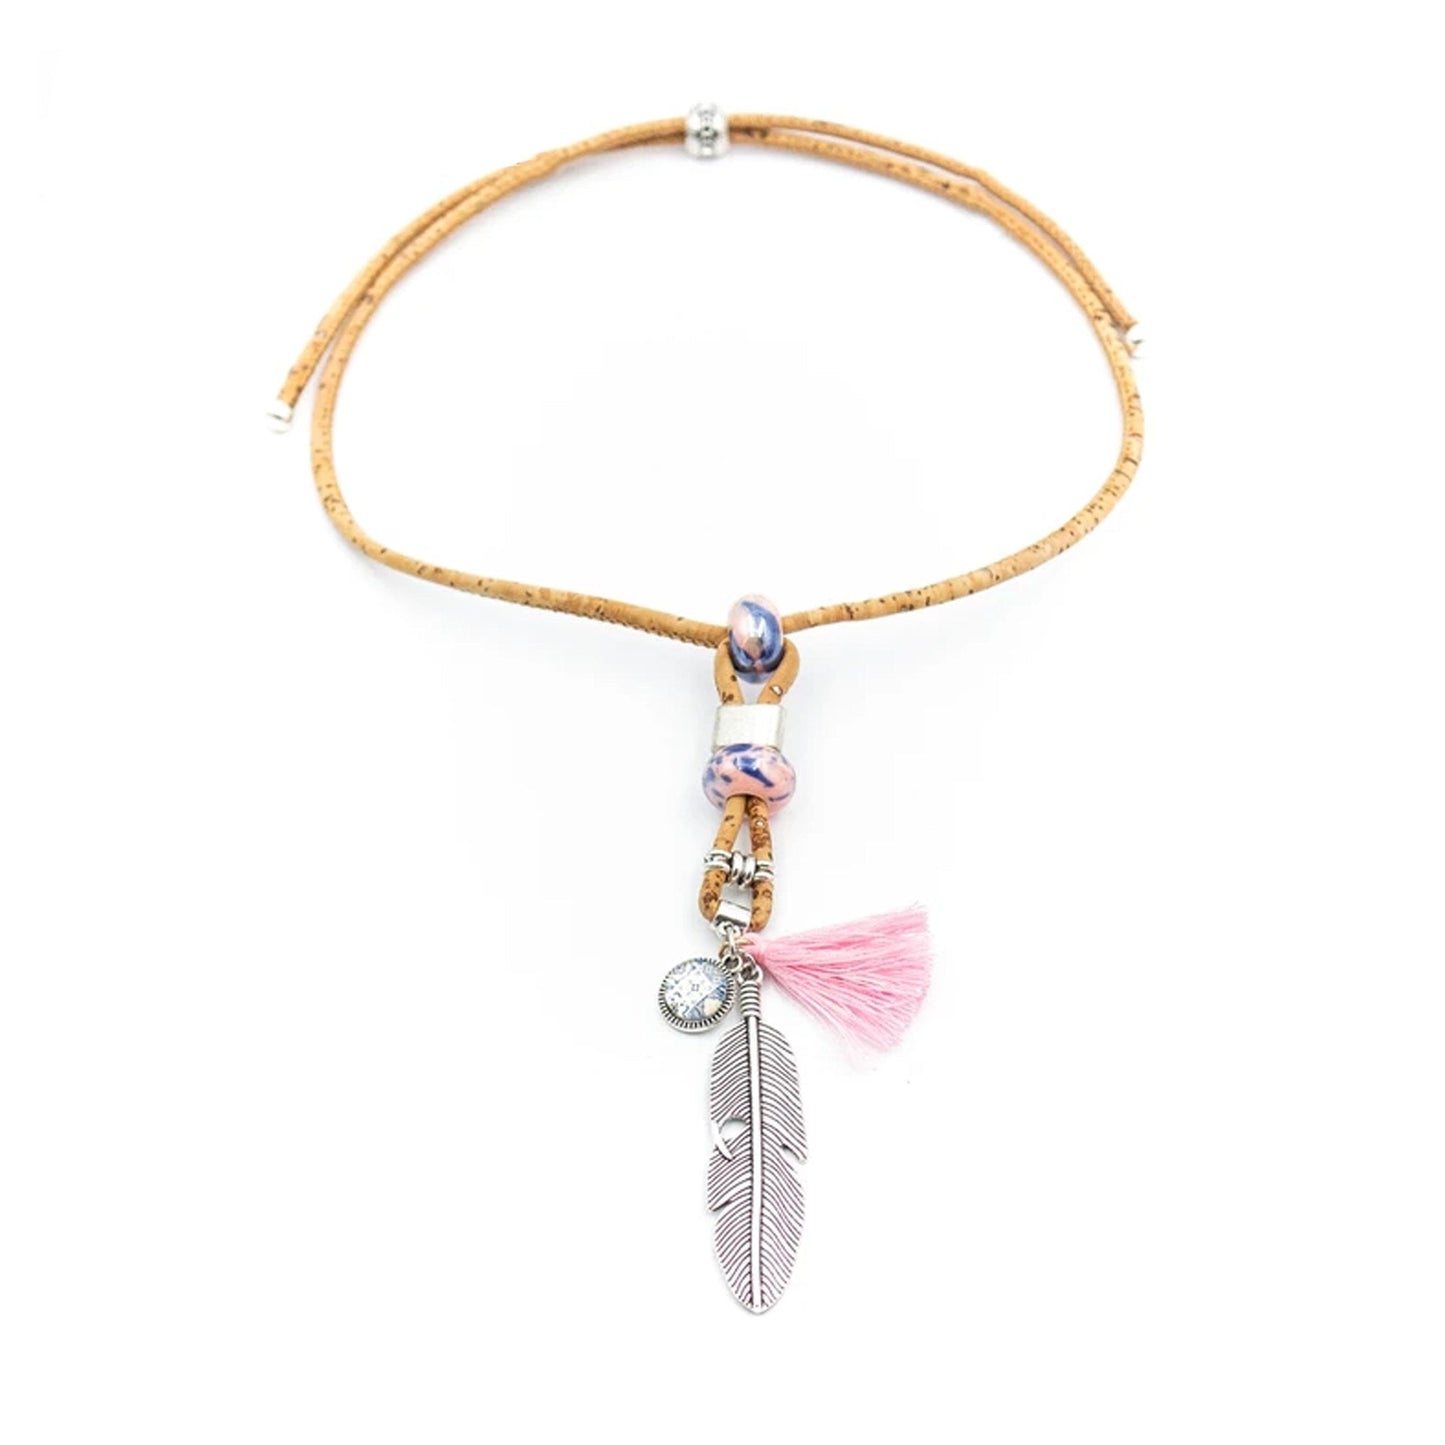 Vegan Women's Necklace - Pink Tassel Antique Feather Handmade Wooden Necklace N-142